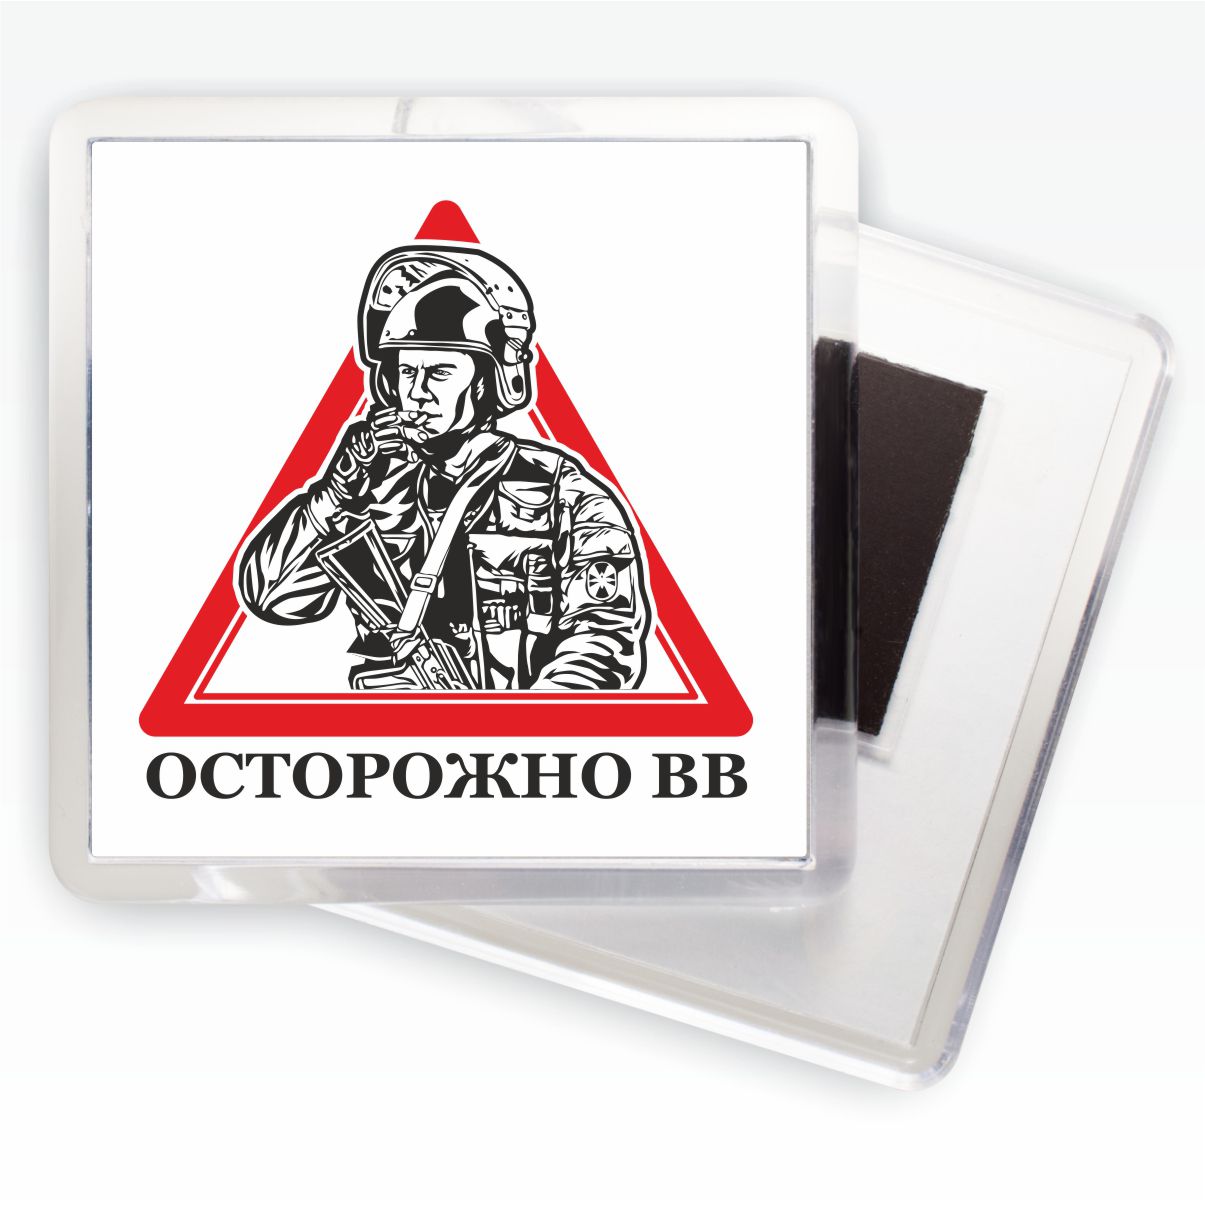 Www Voenpro Ru Интернет Магазин